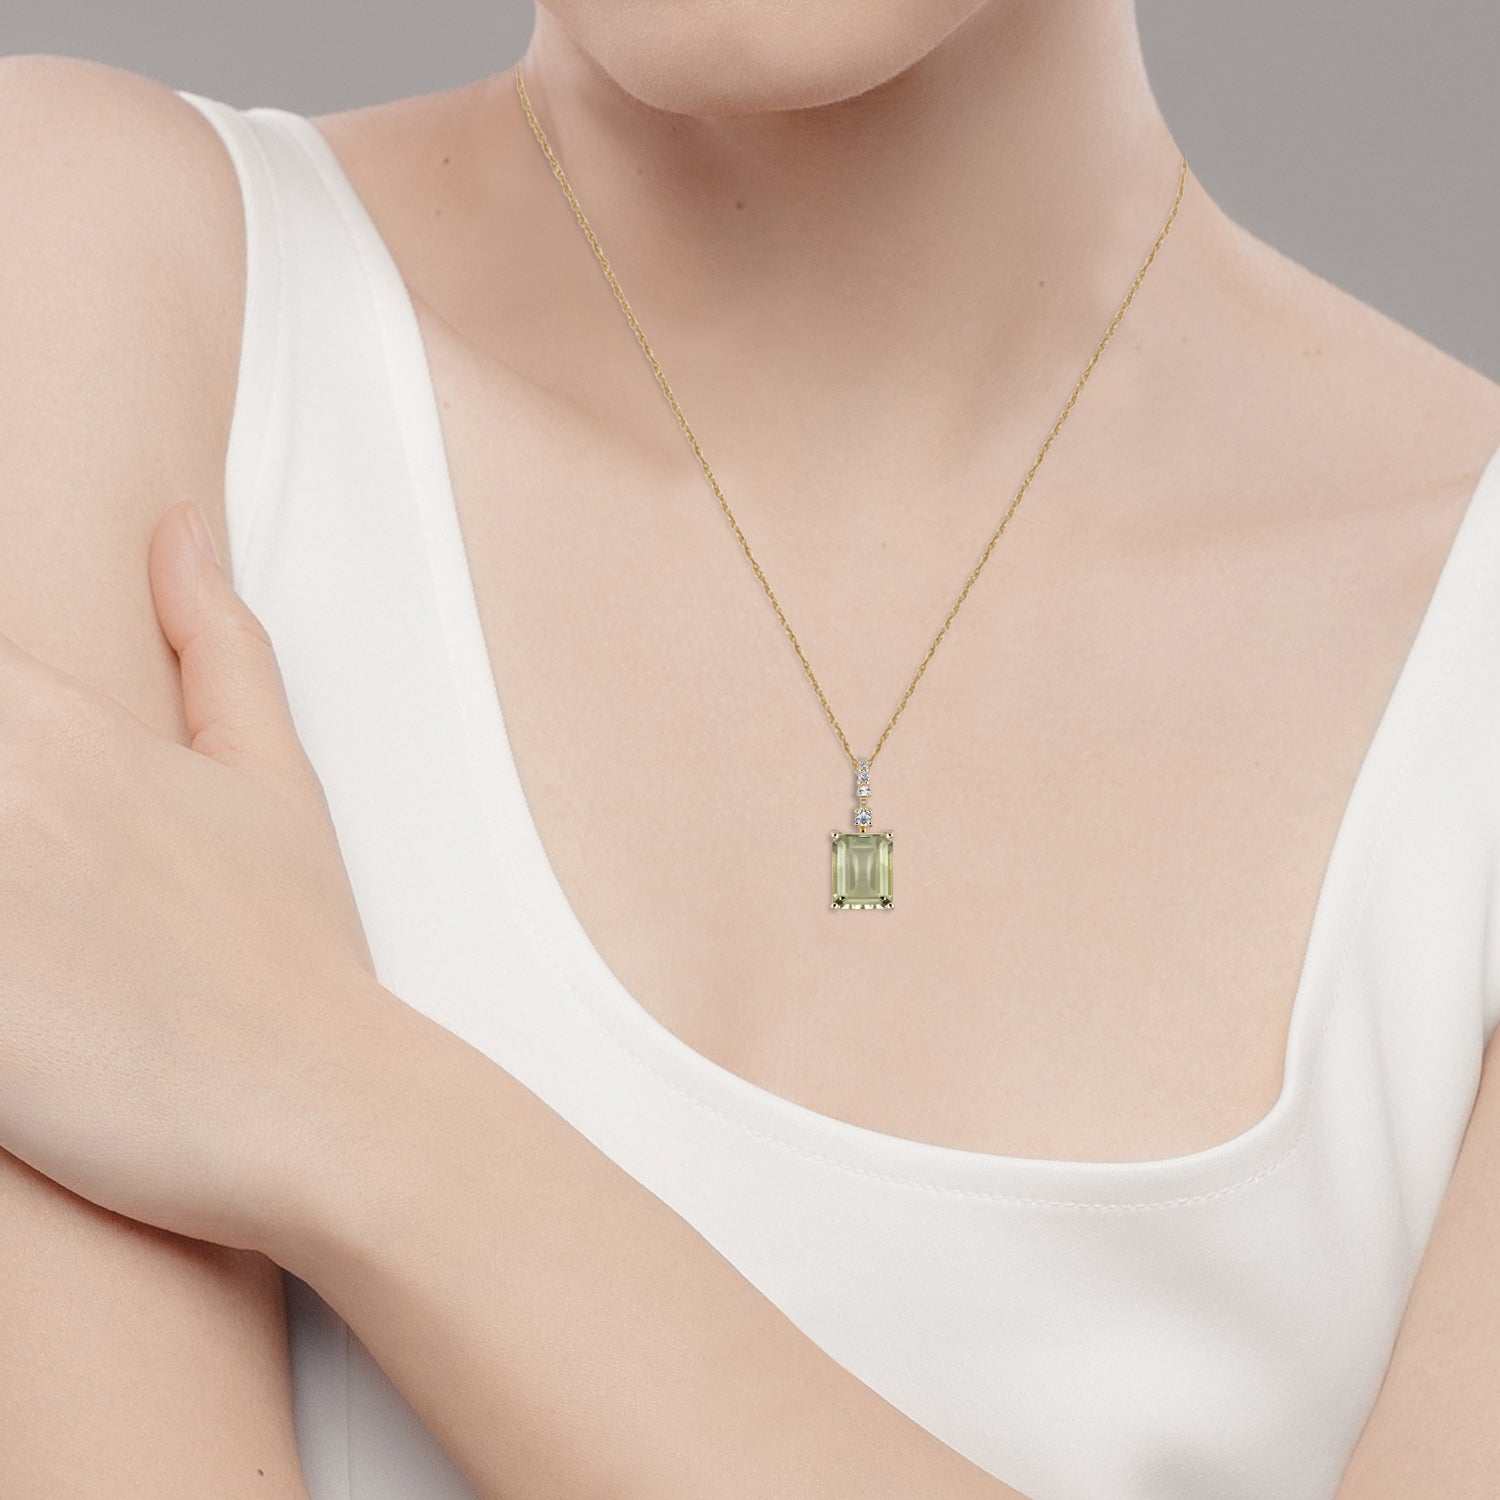 10k Yellow Gold Genuine Emerald Cut Green Amethyst Pendant Necklace